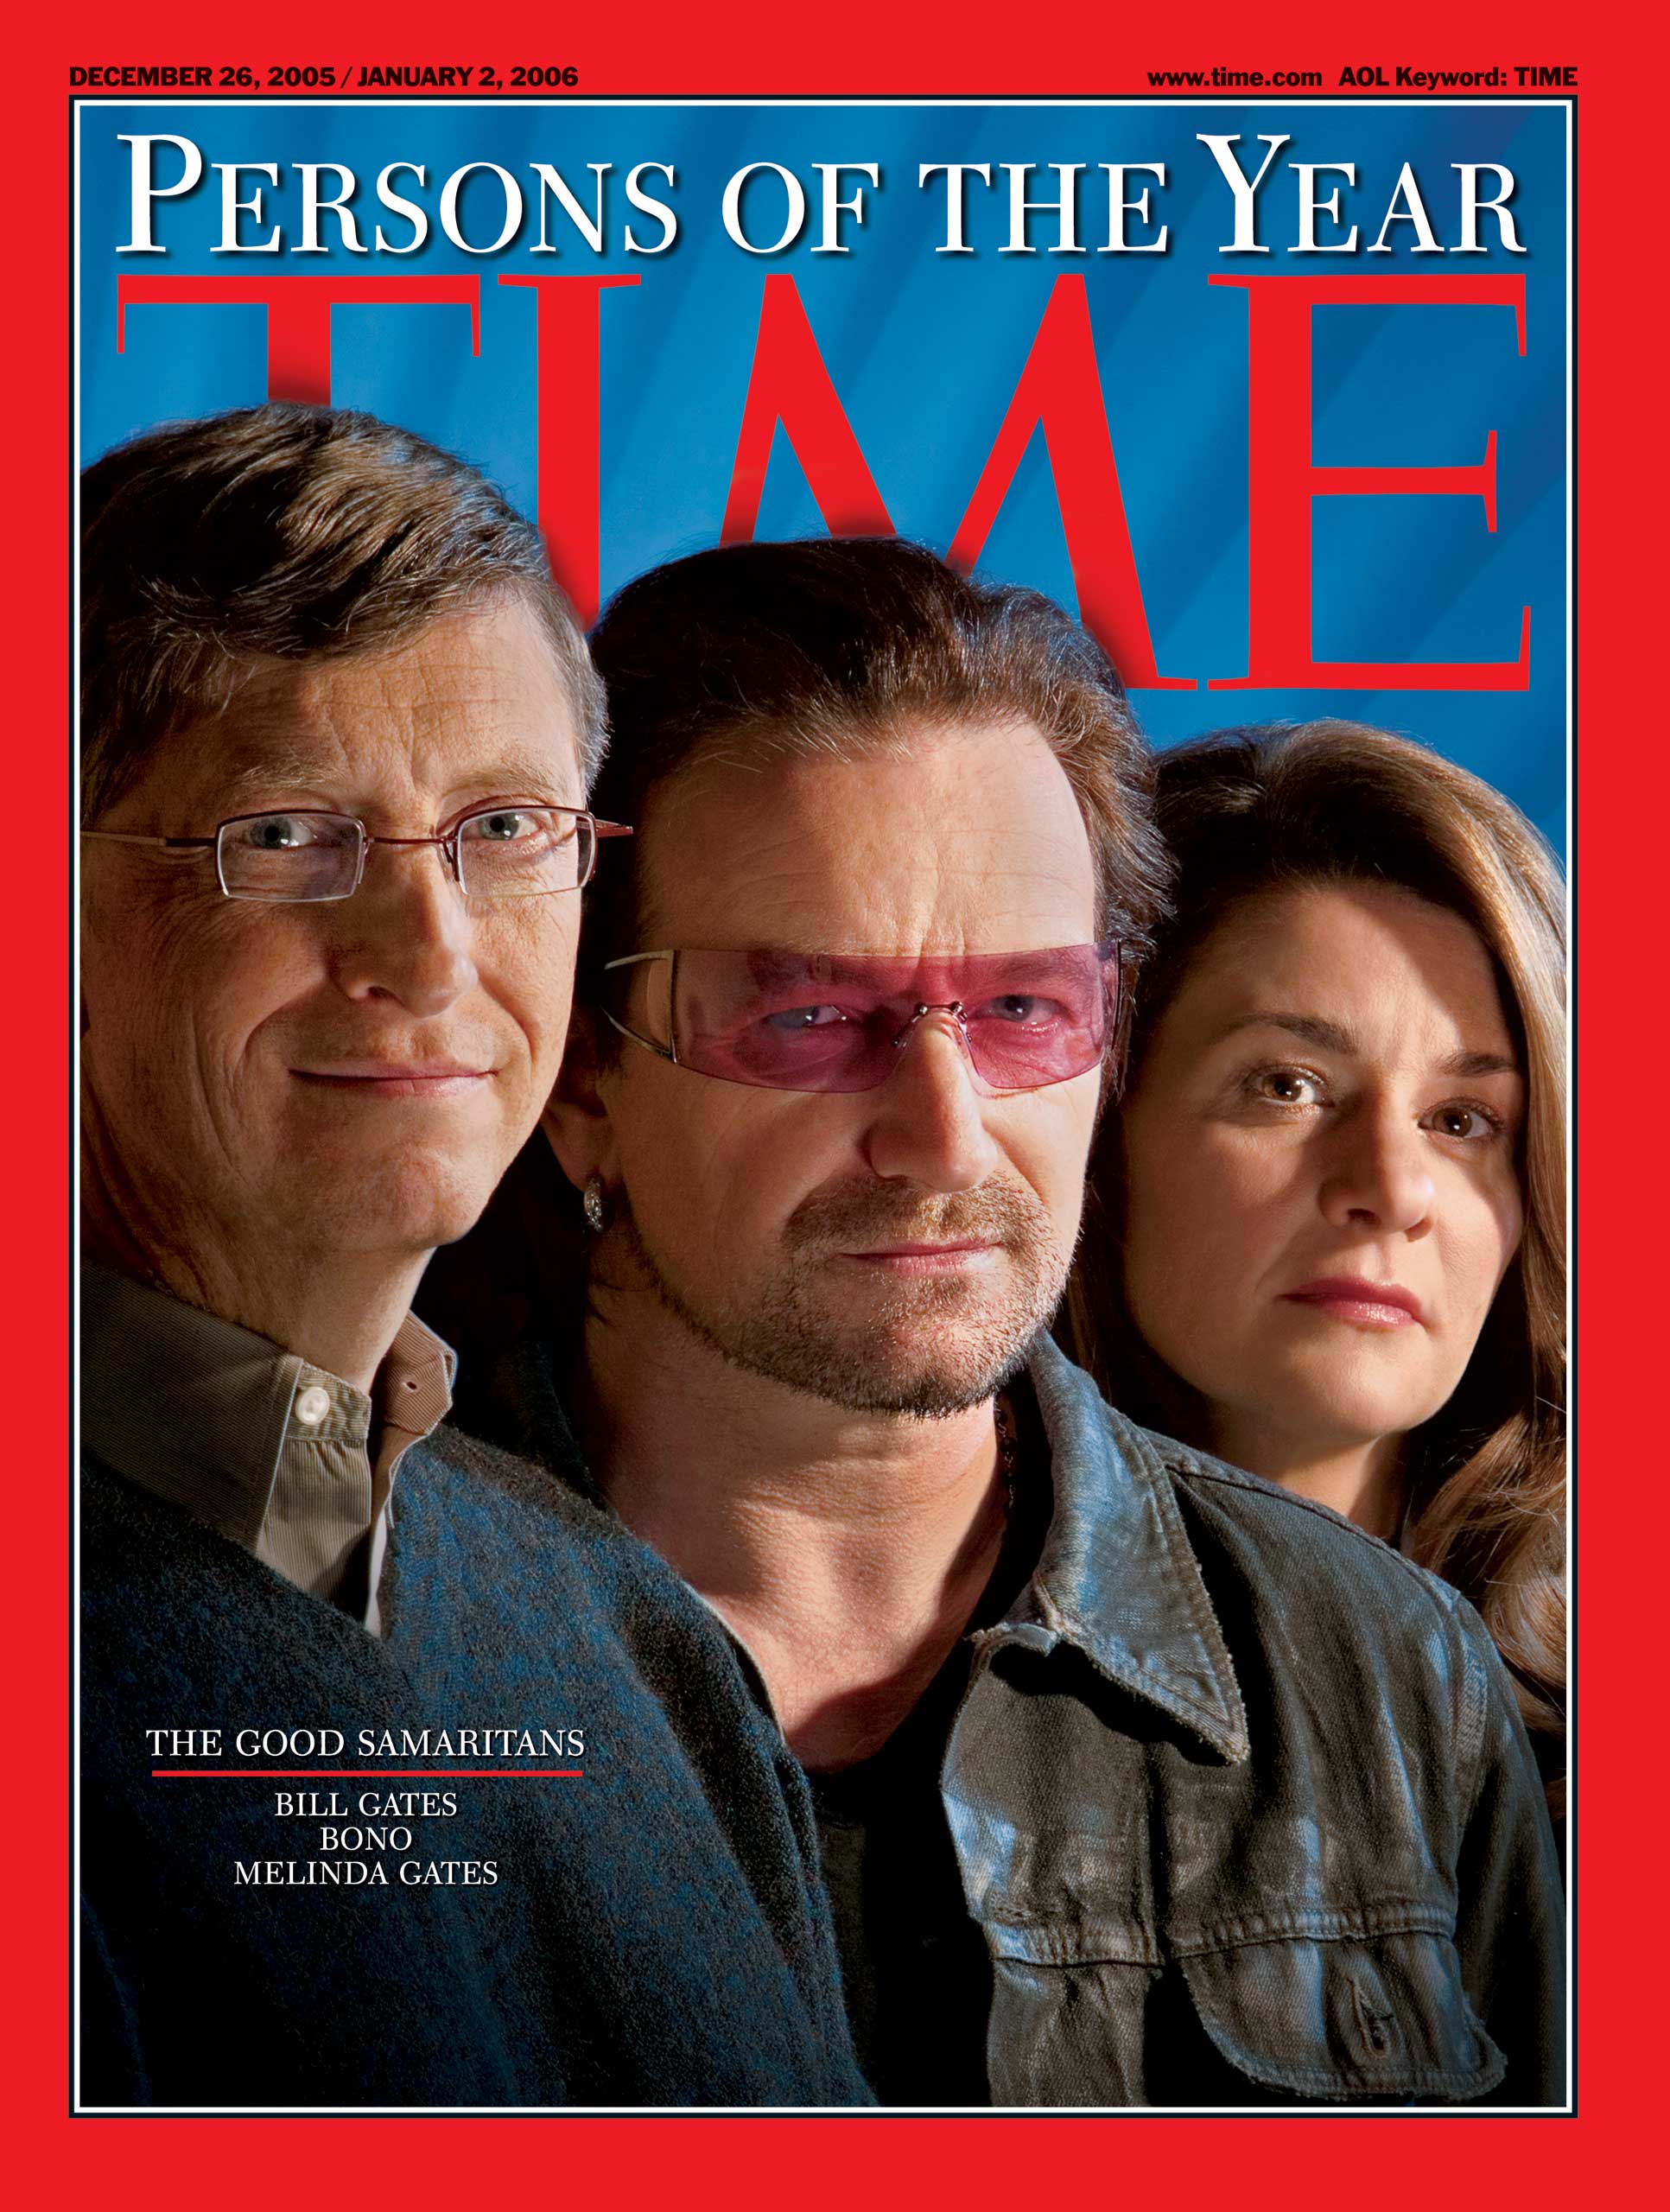 2005: The Good Samaritans: Bill Gates, Bono, Melinda Gates